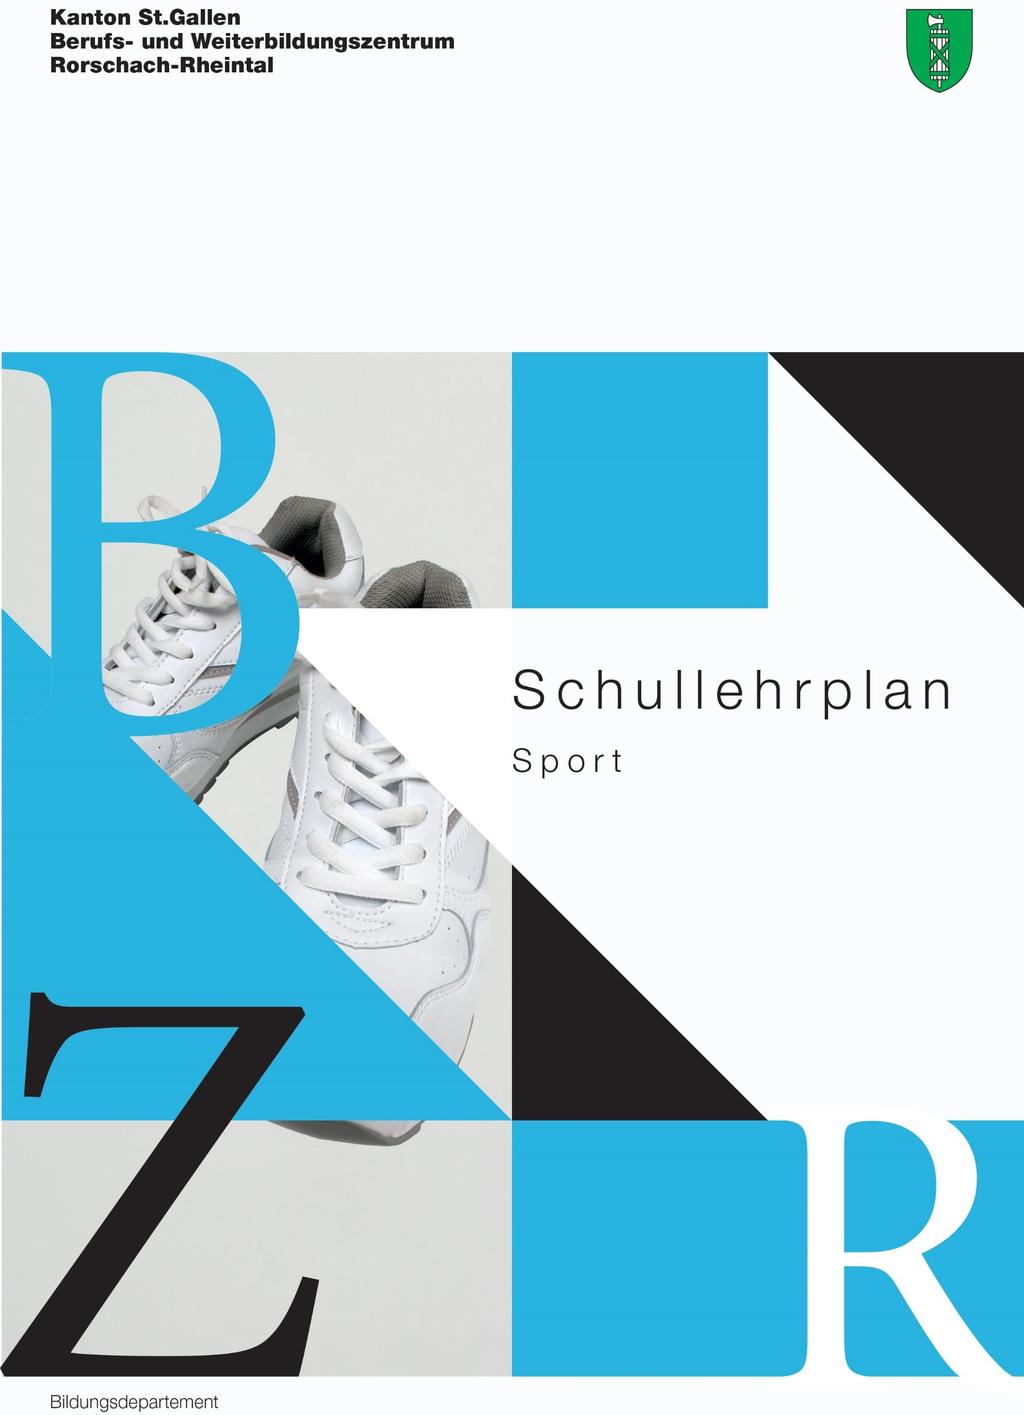 Titelseite mit BZR-Logo